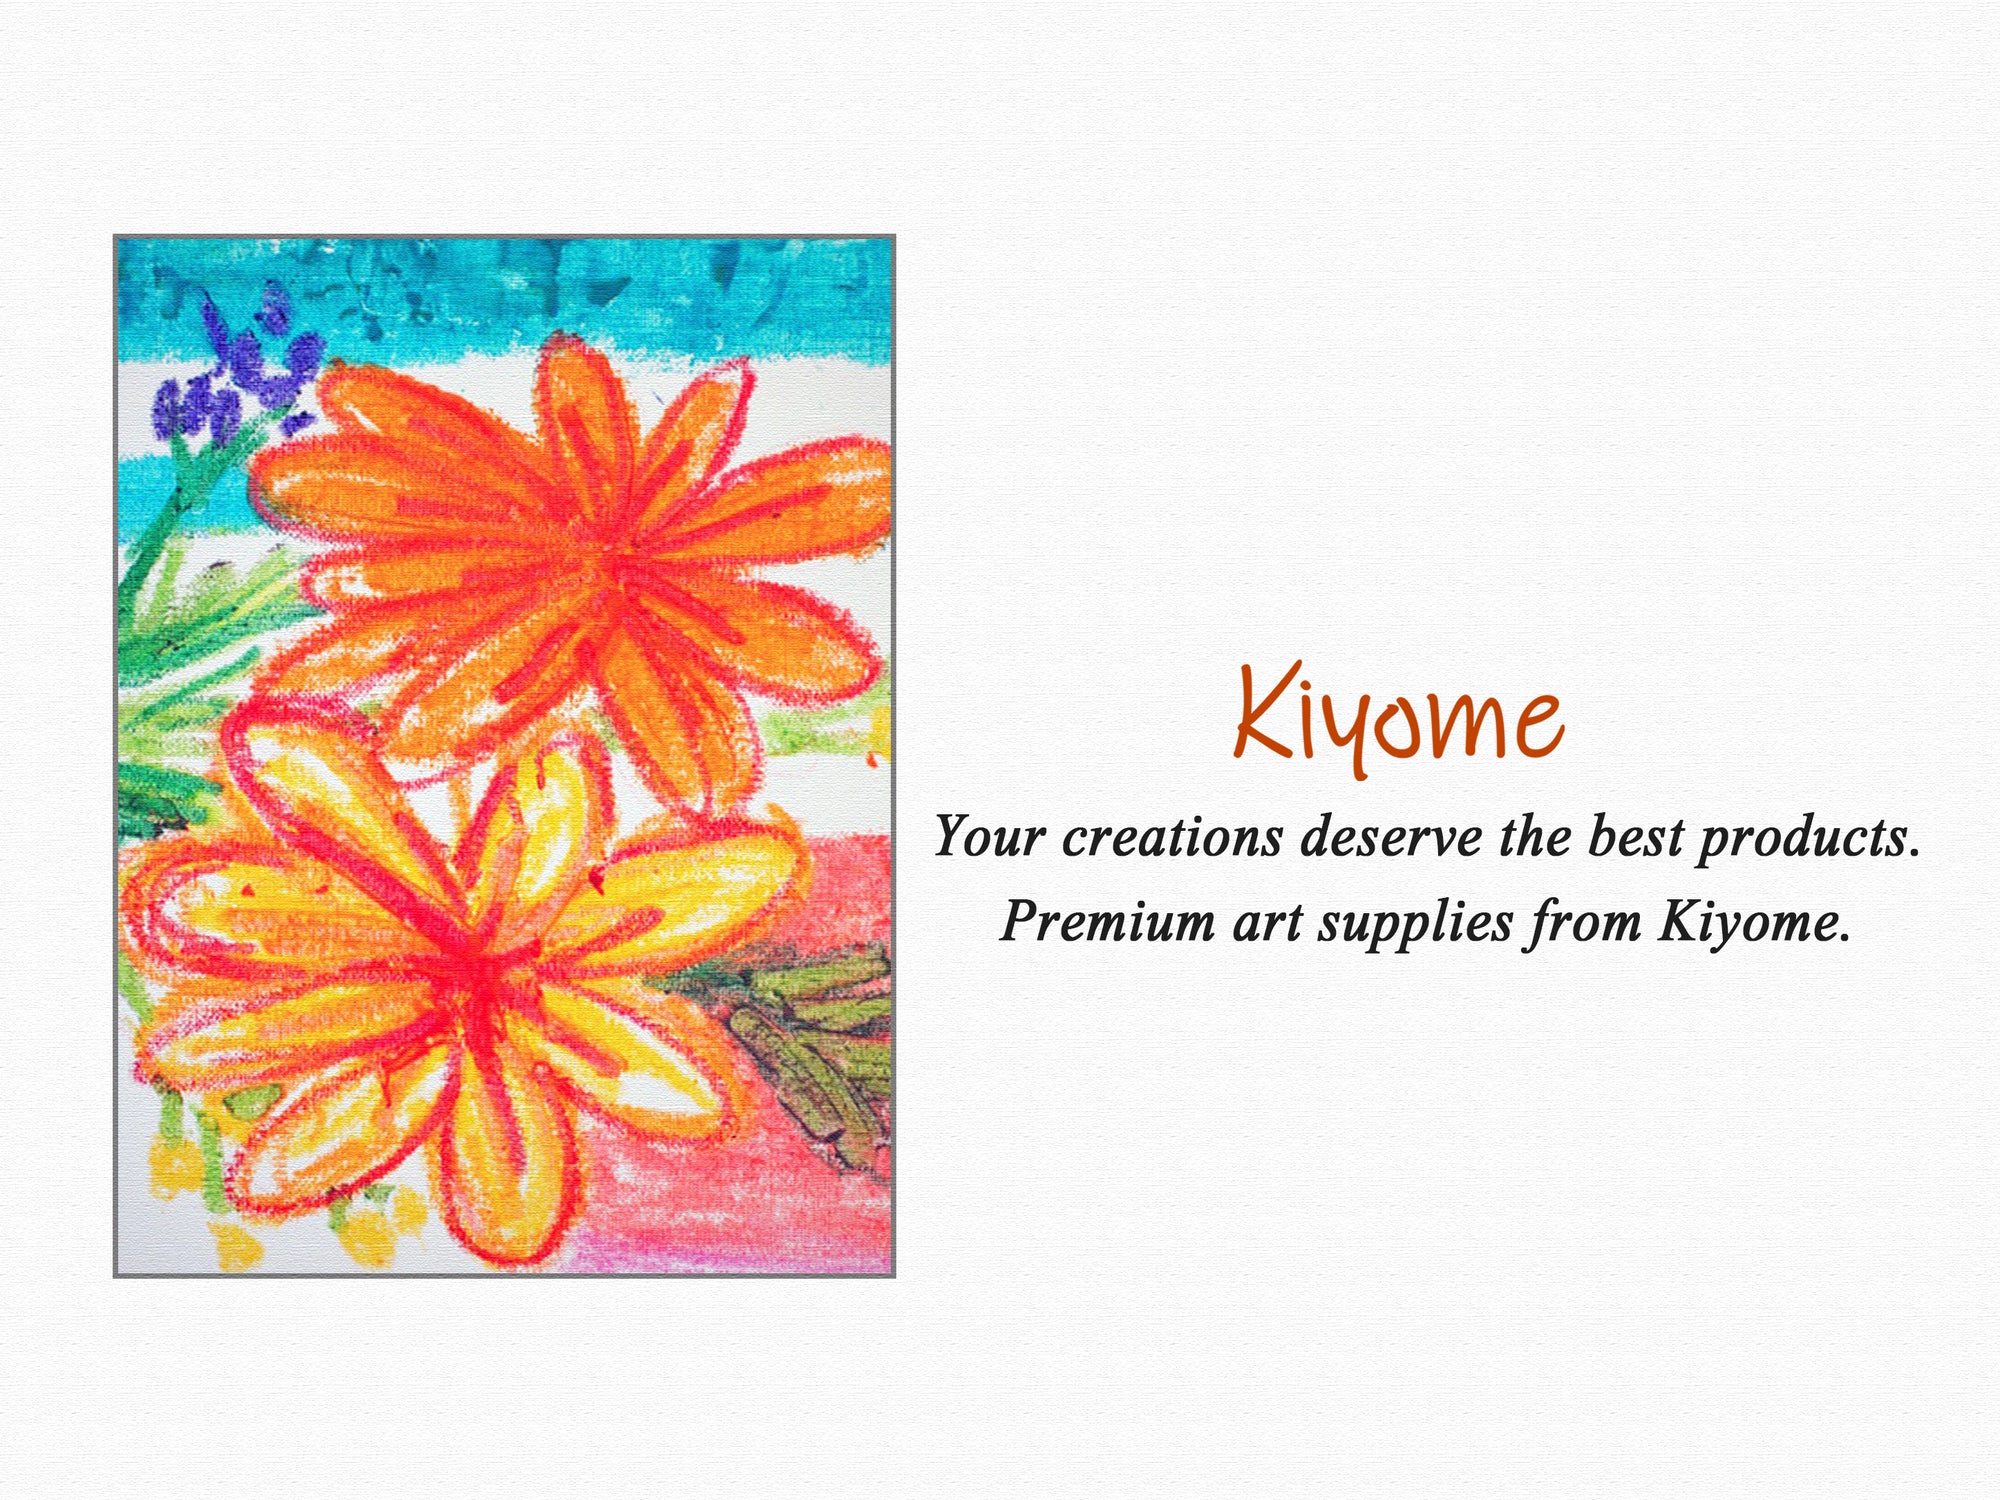 Kiyome Cartridge Paper | 140 GSM | A4 | 20 Sheets